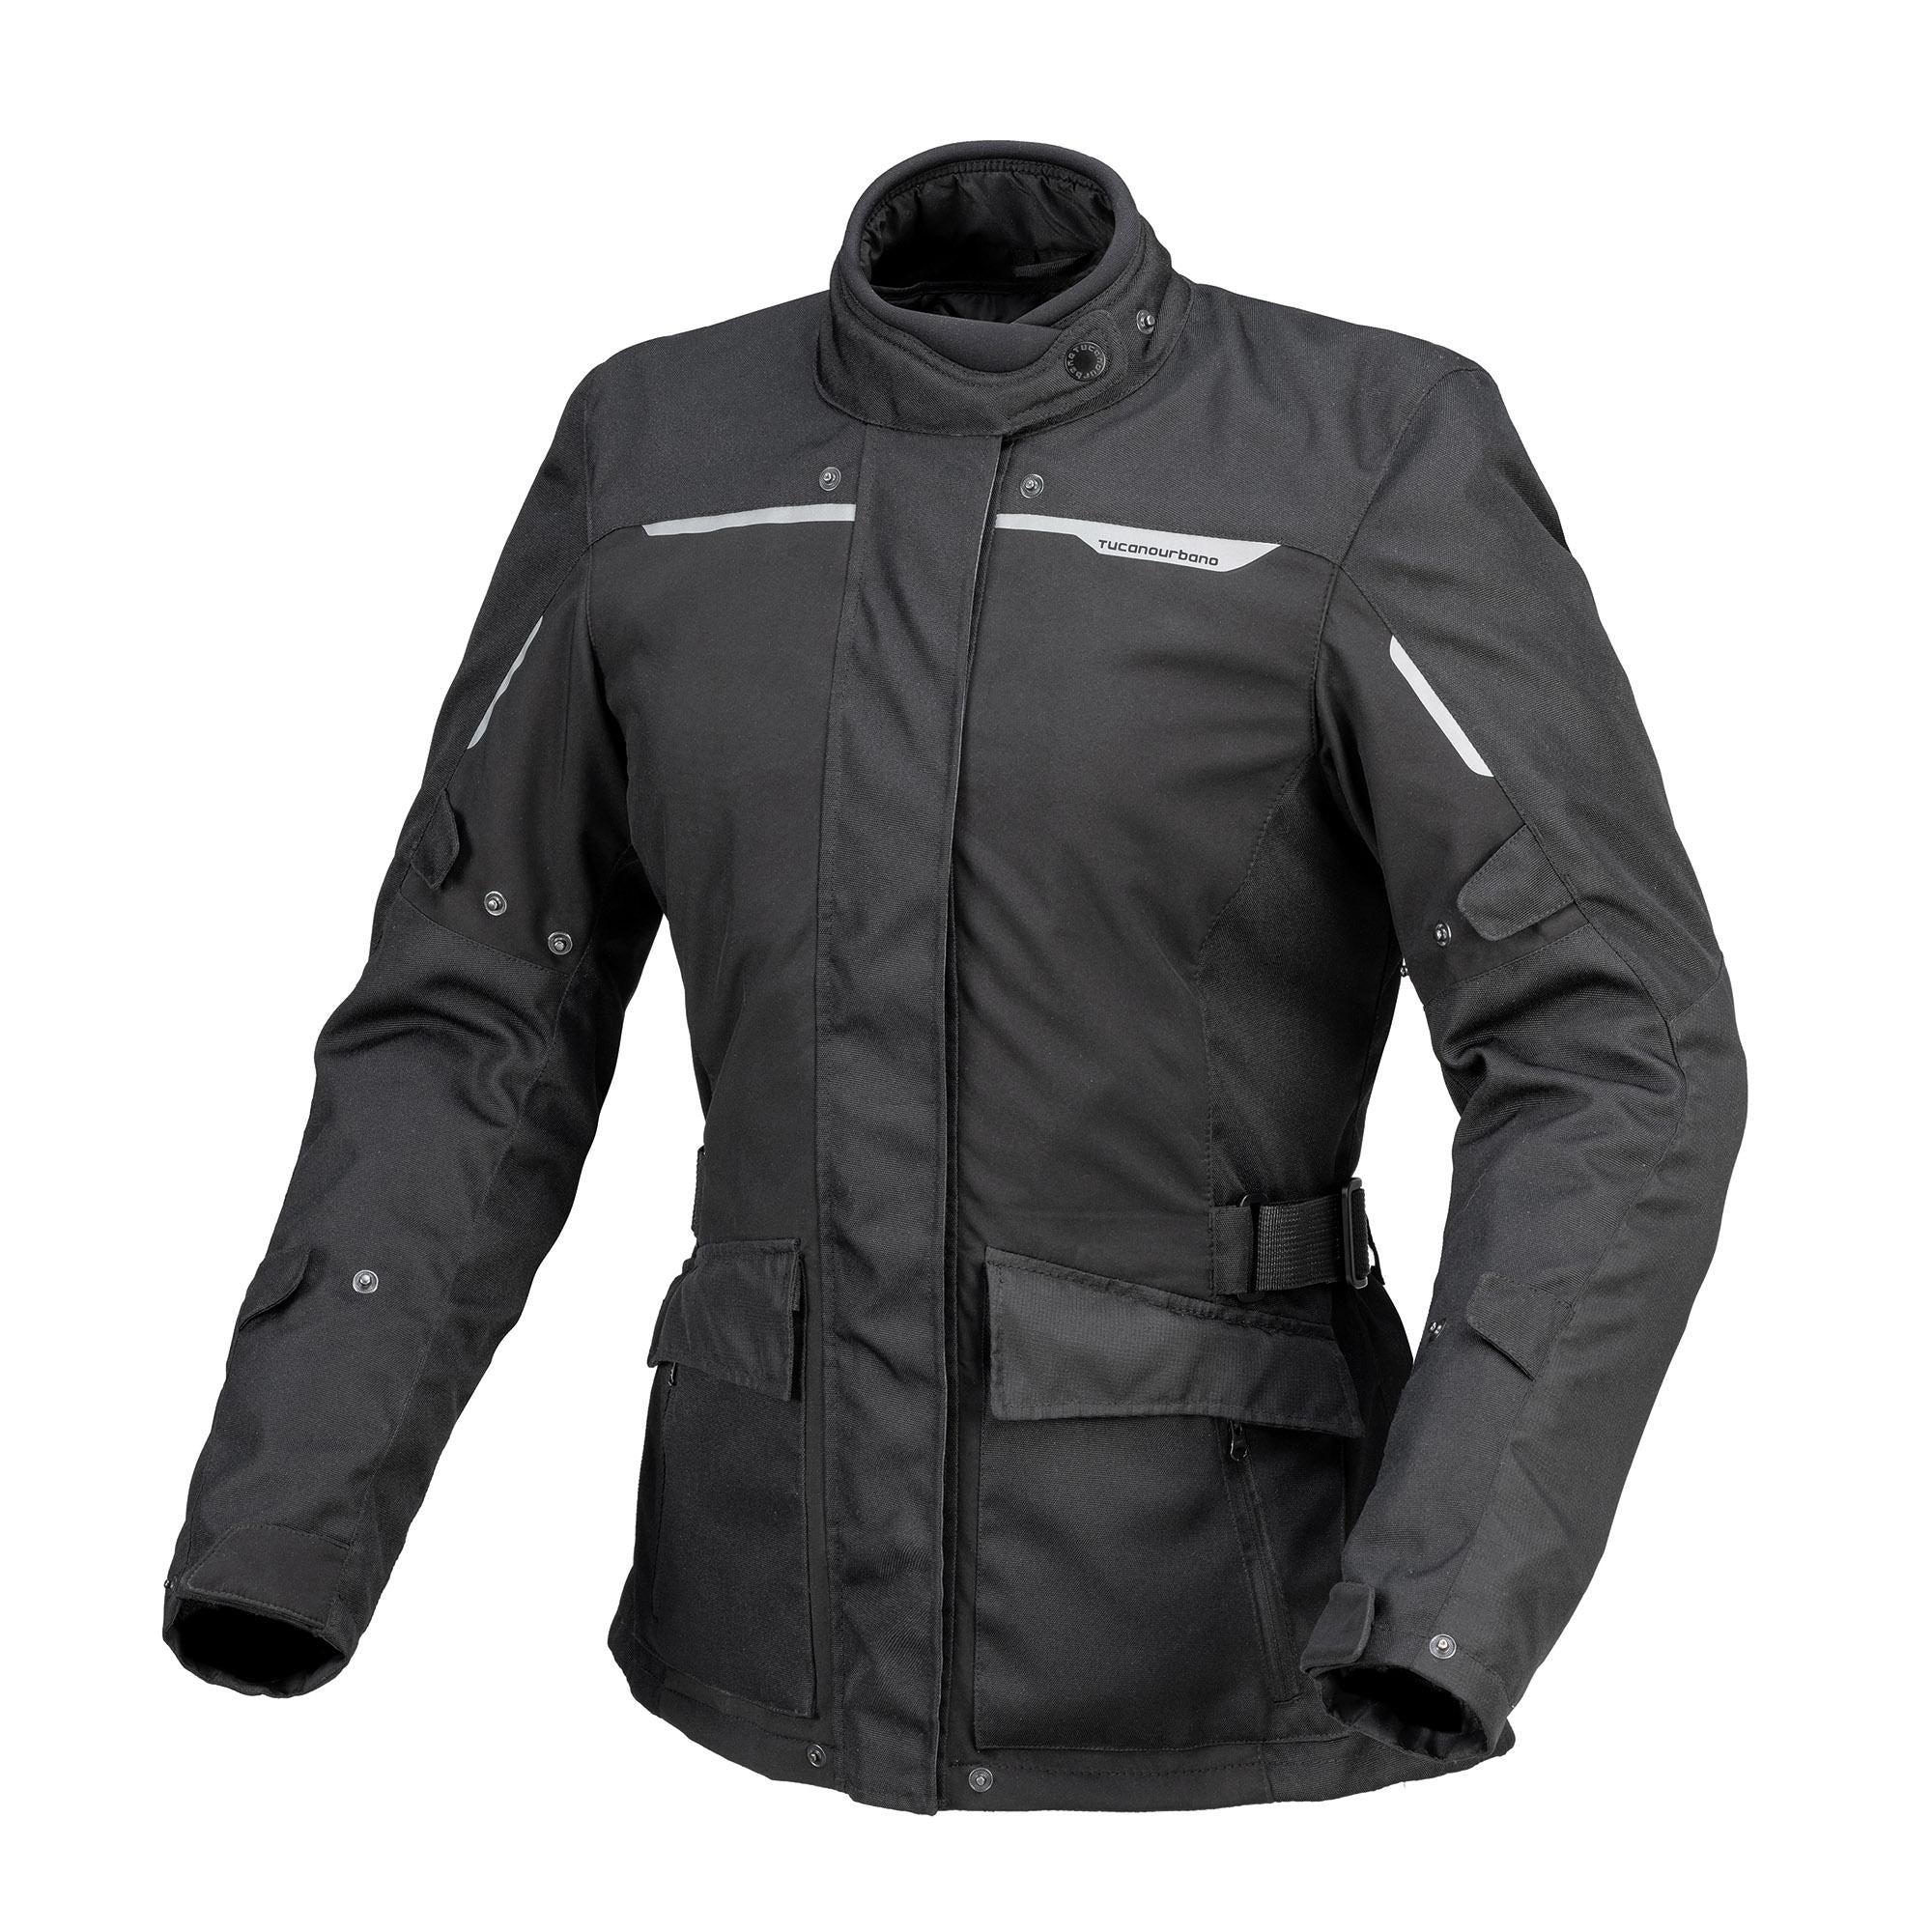 Women's Stretch Jacket Ultraleggera Tucano Urban Ire 8104WF089 Medium Gray  For Sale Online 